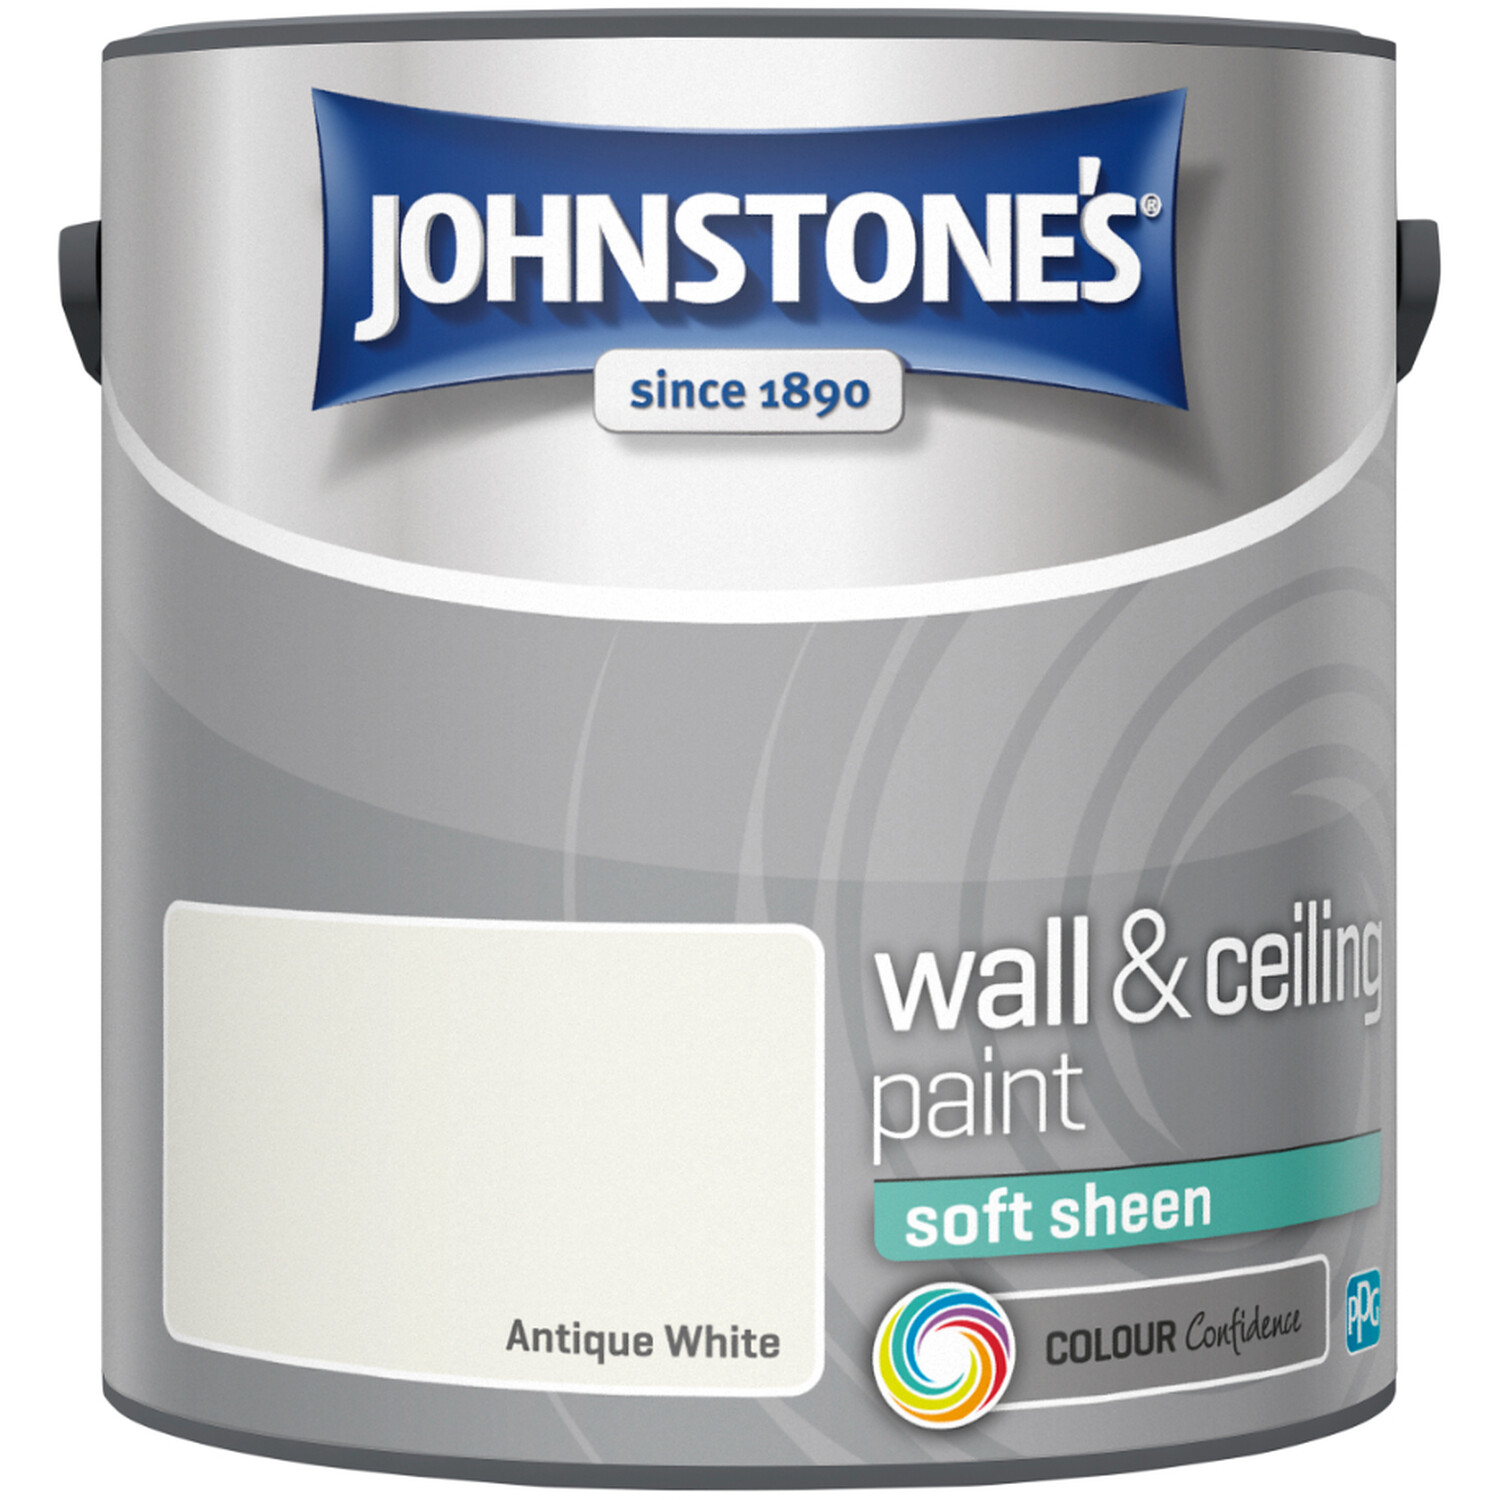 Johnstones Soft Sheen Emulsion Paint - Antique White / 2.5l Image 2